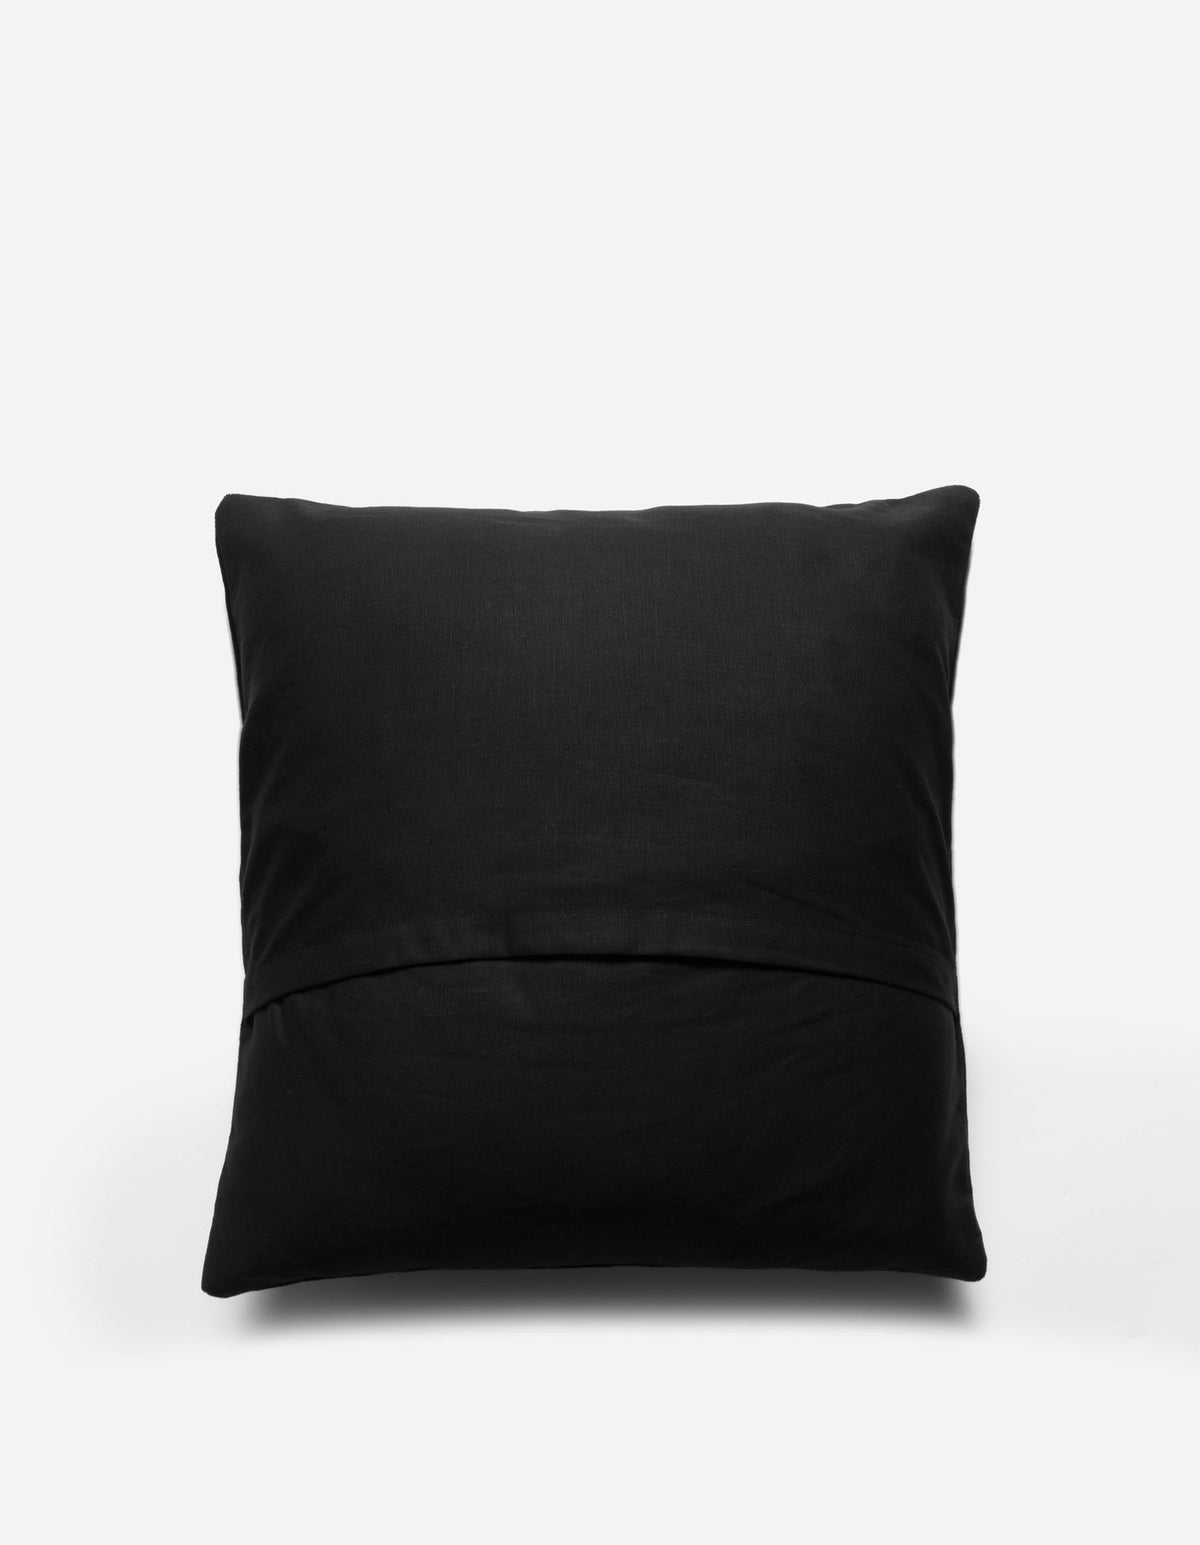 5087 Original Dragon Cushion in Black